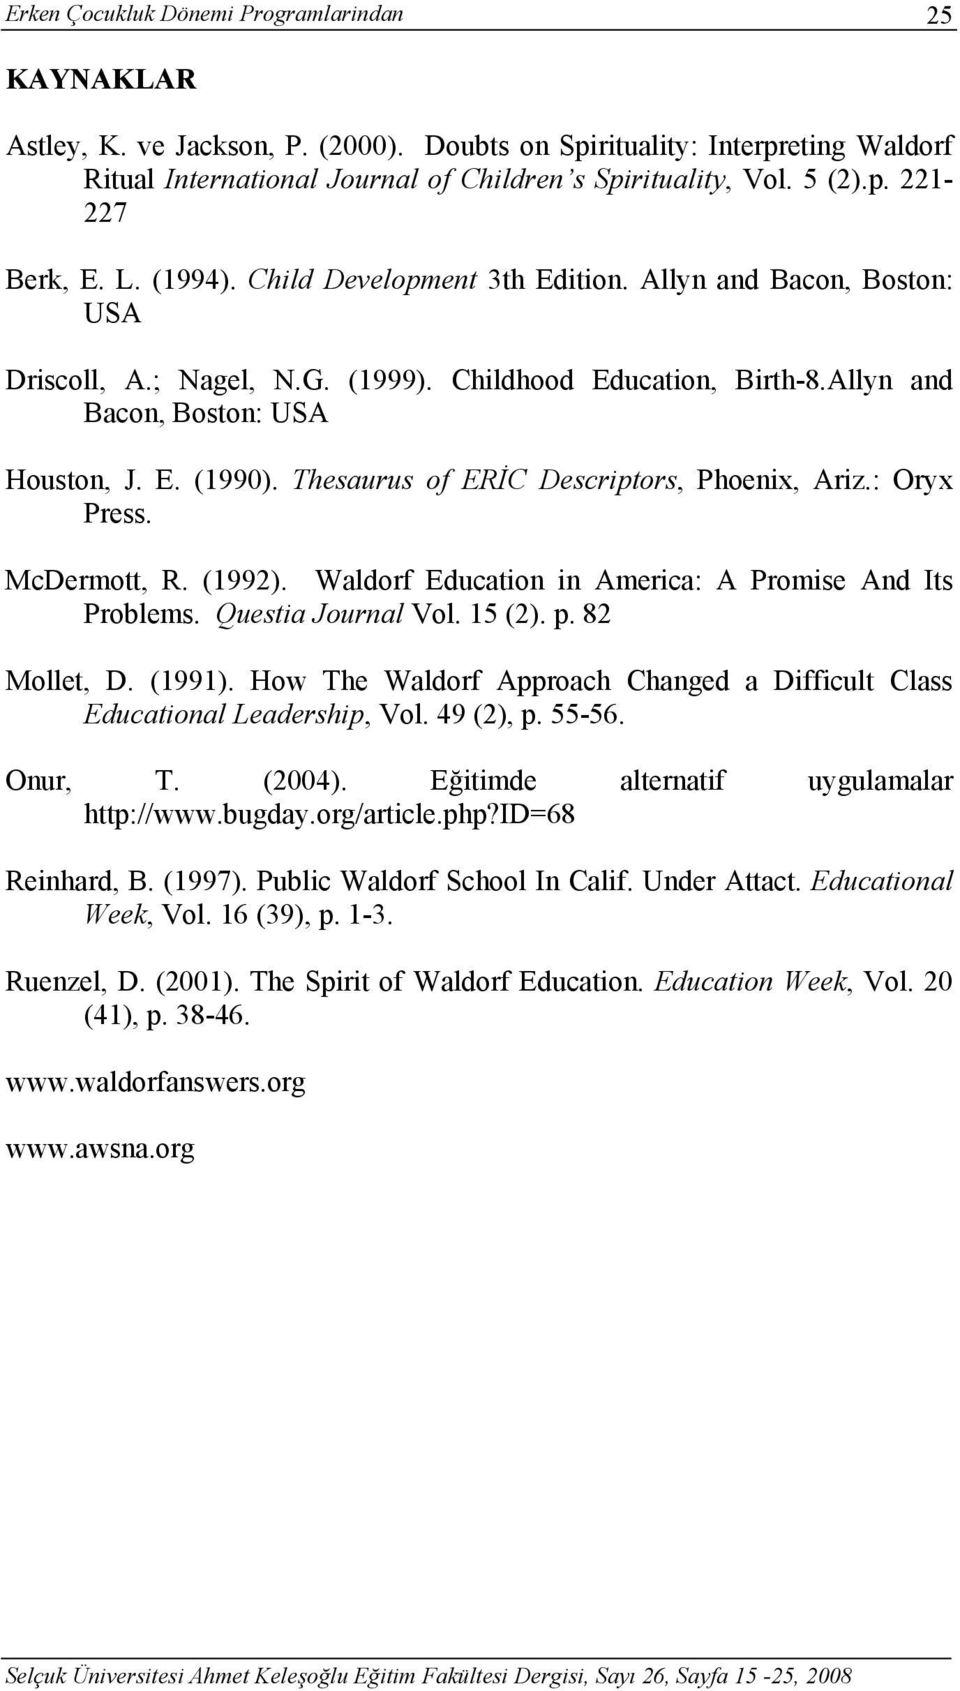 Thesaurus of ERİC Descriptors, Phoenix, Ariz.: Oryx Press. McDermott, R. (1992). Waldorf Education in America: A Promise And Its Problems. Questia Journal Vol. 15 (2). p. 82 Mollet, D. (1991).